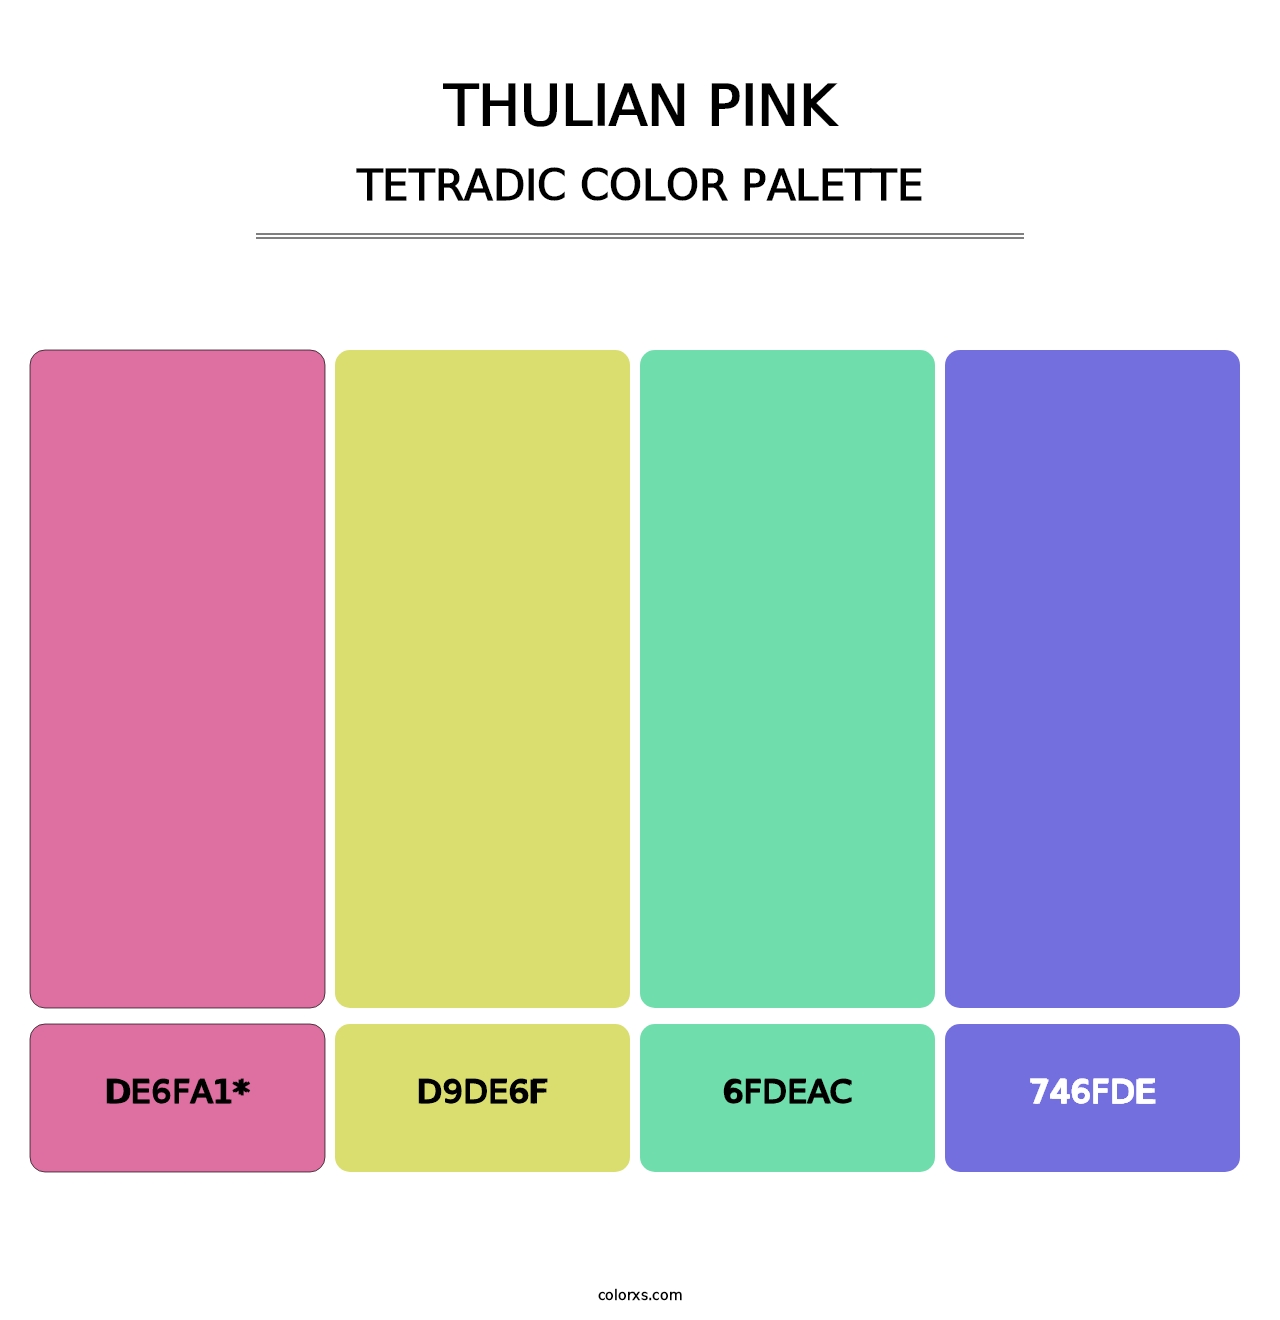 Thulian Pink - Tetradic Color Palette